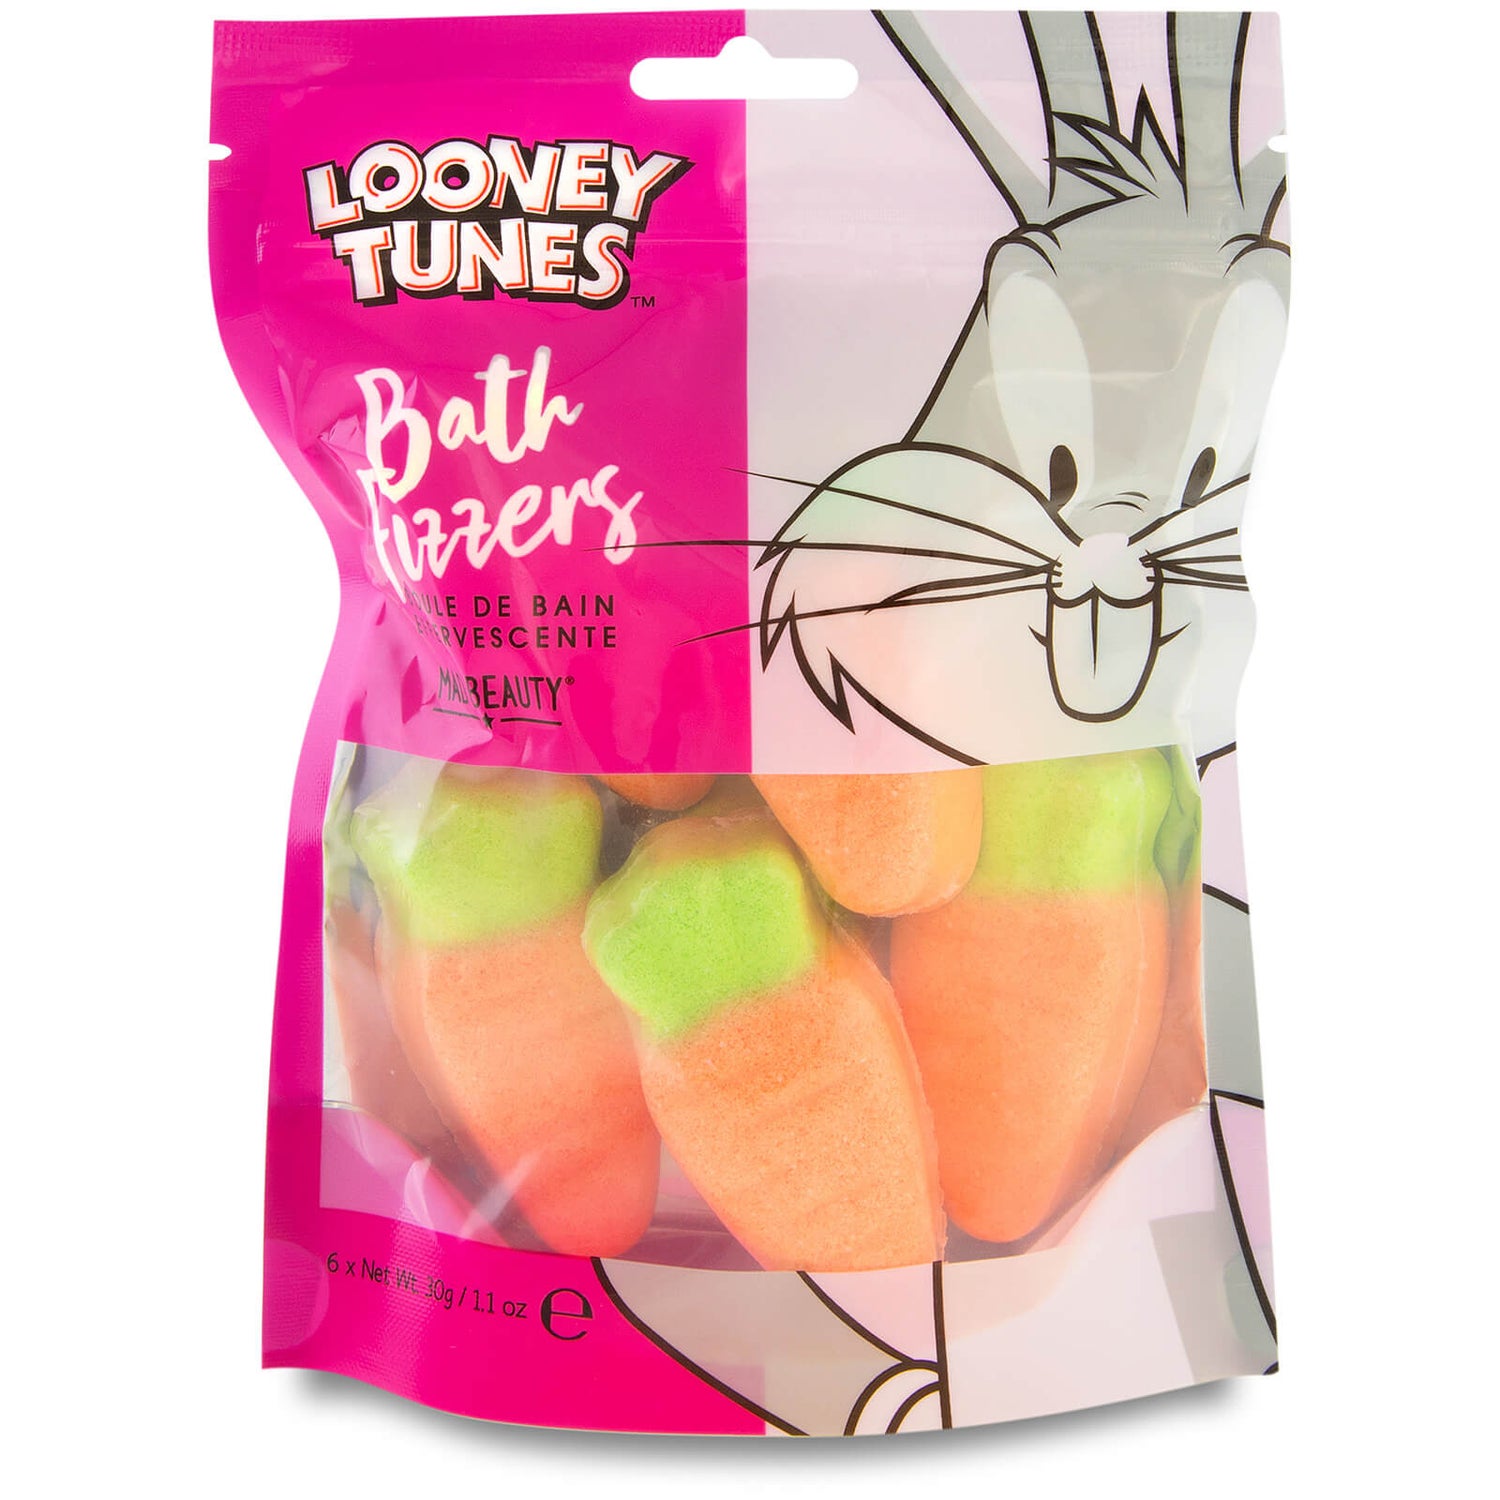 Looney Tunes Carrot Bath Fizzers